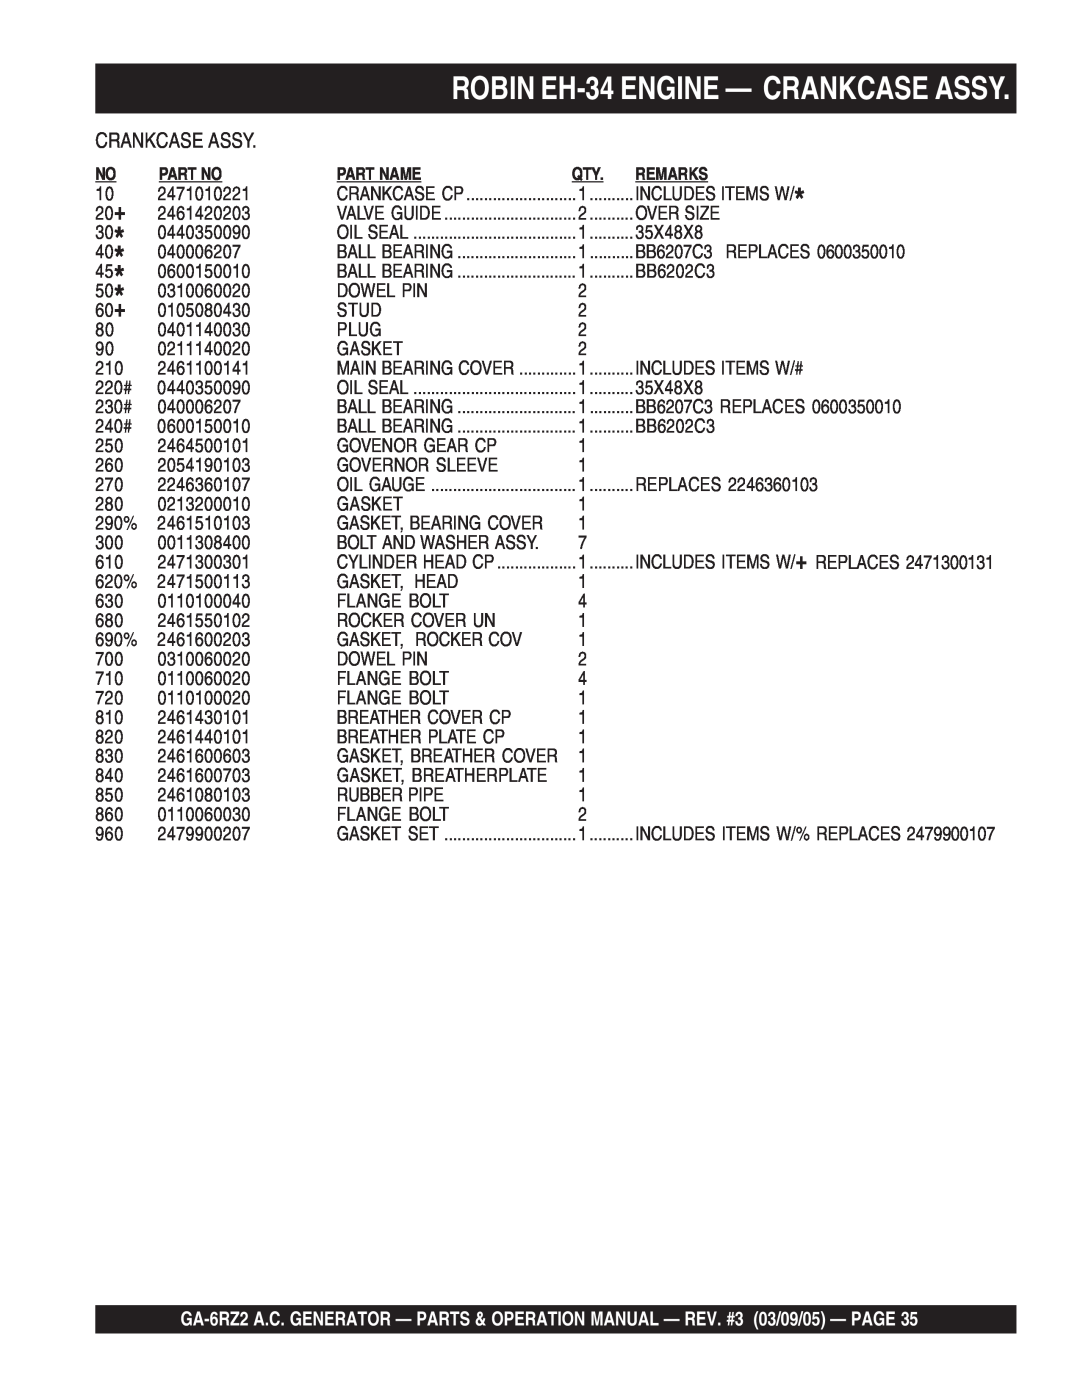 Multiquip GA-6RZ2 operation manual ROBIN EH-34ENGINE - CRANKCASE ASSY, 2471010221 